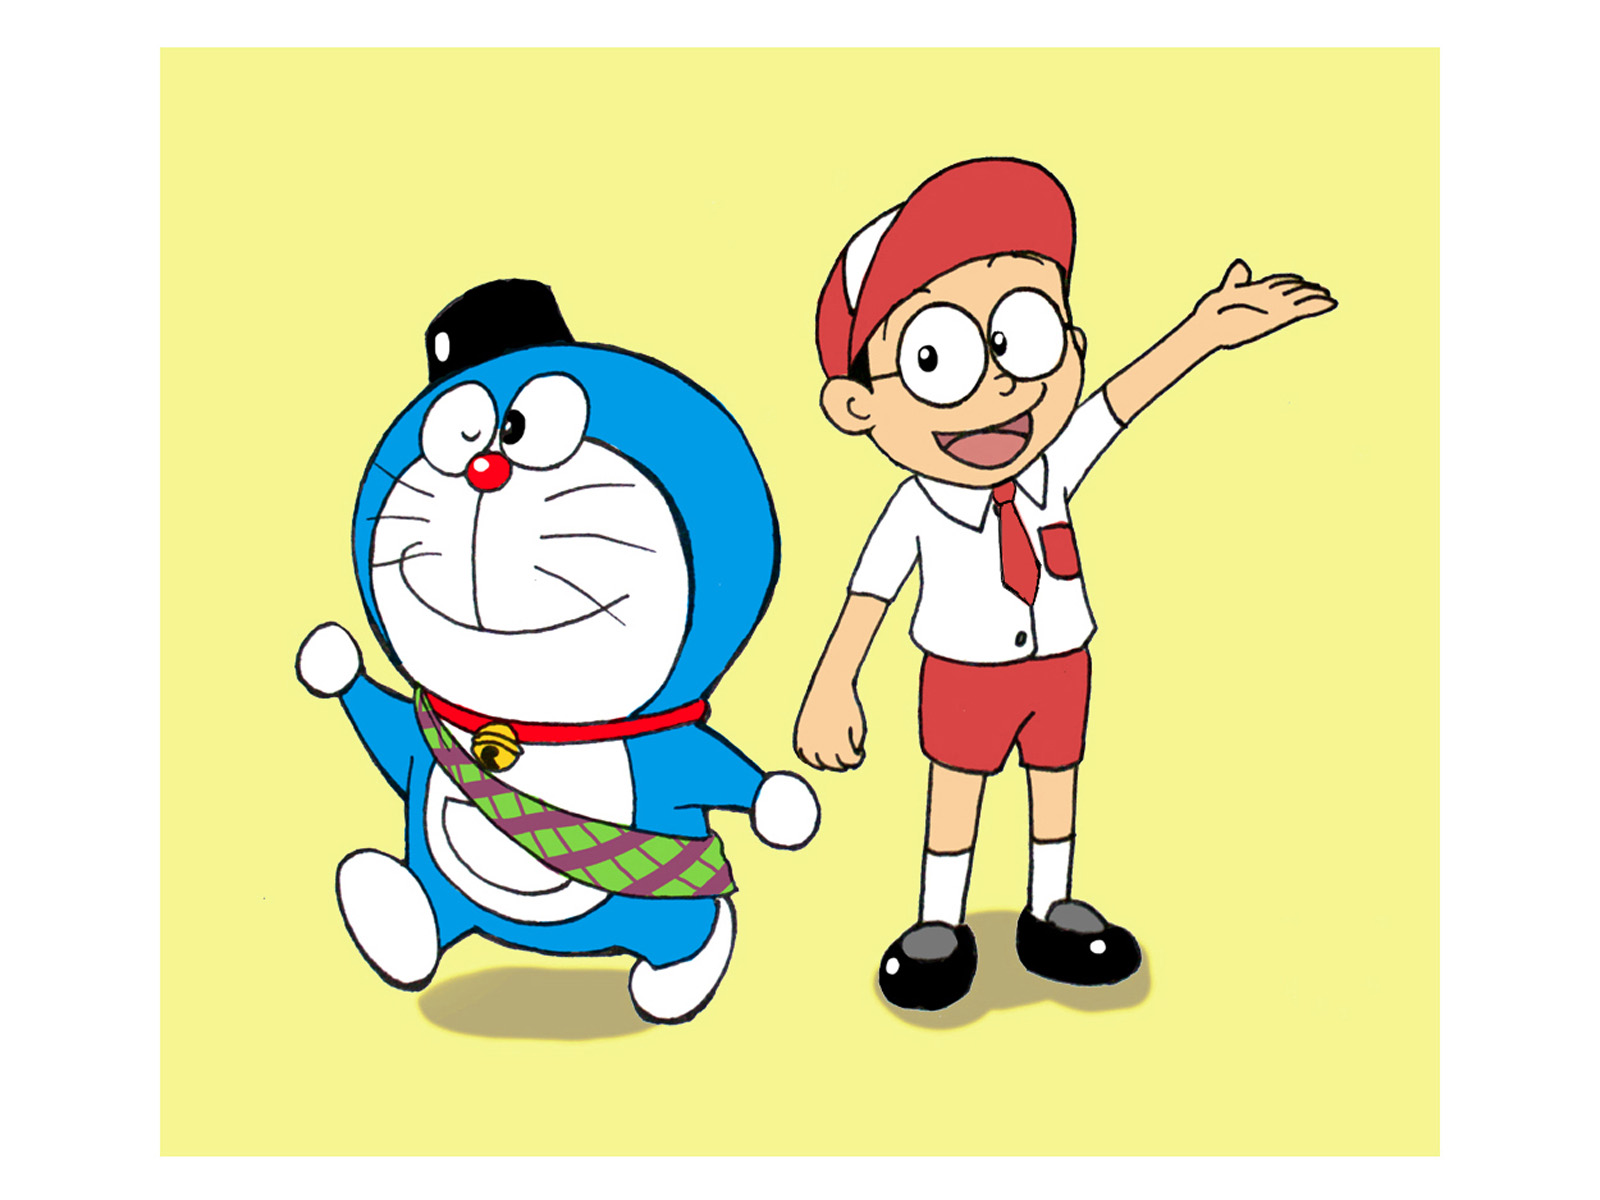 Doraemon Wallpapers - Wallpaper, High Definition, High Quality, Widescreen